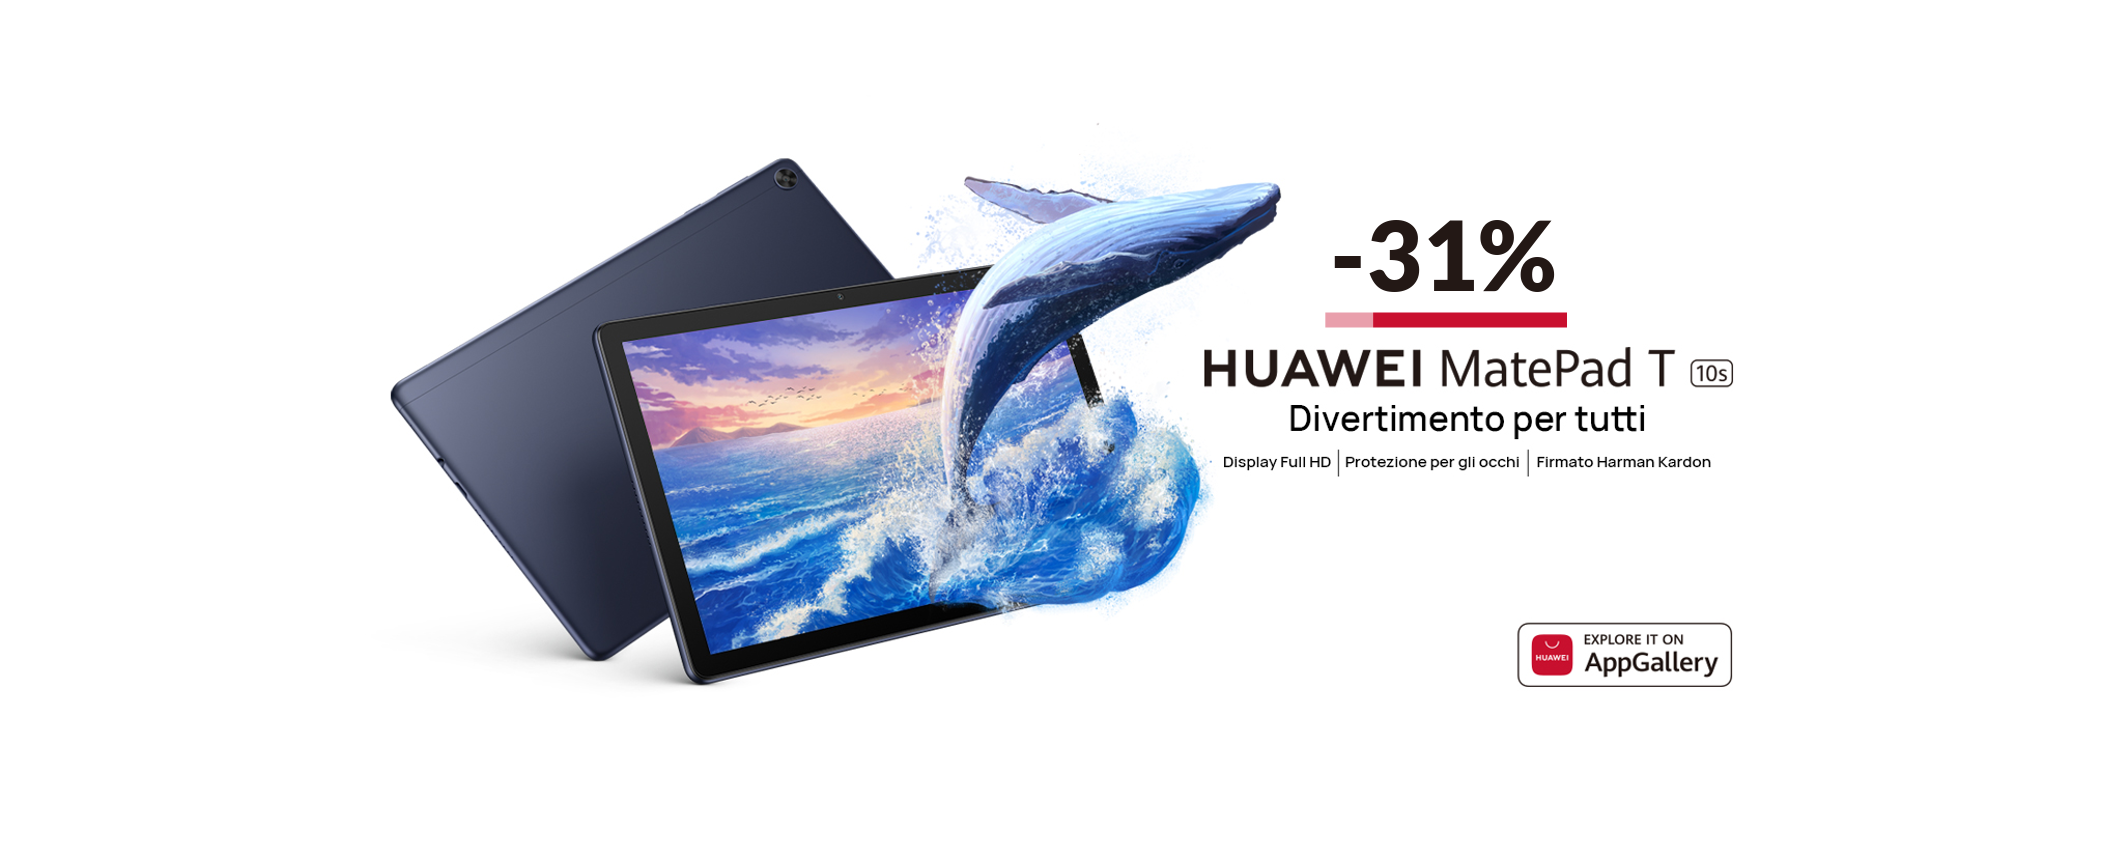 Huawei MatePad T 10s in SCONTO su Amazon ad appena 199€